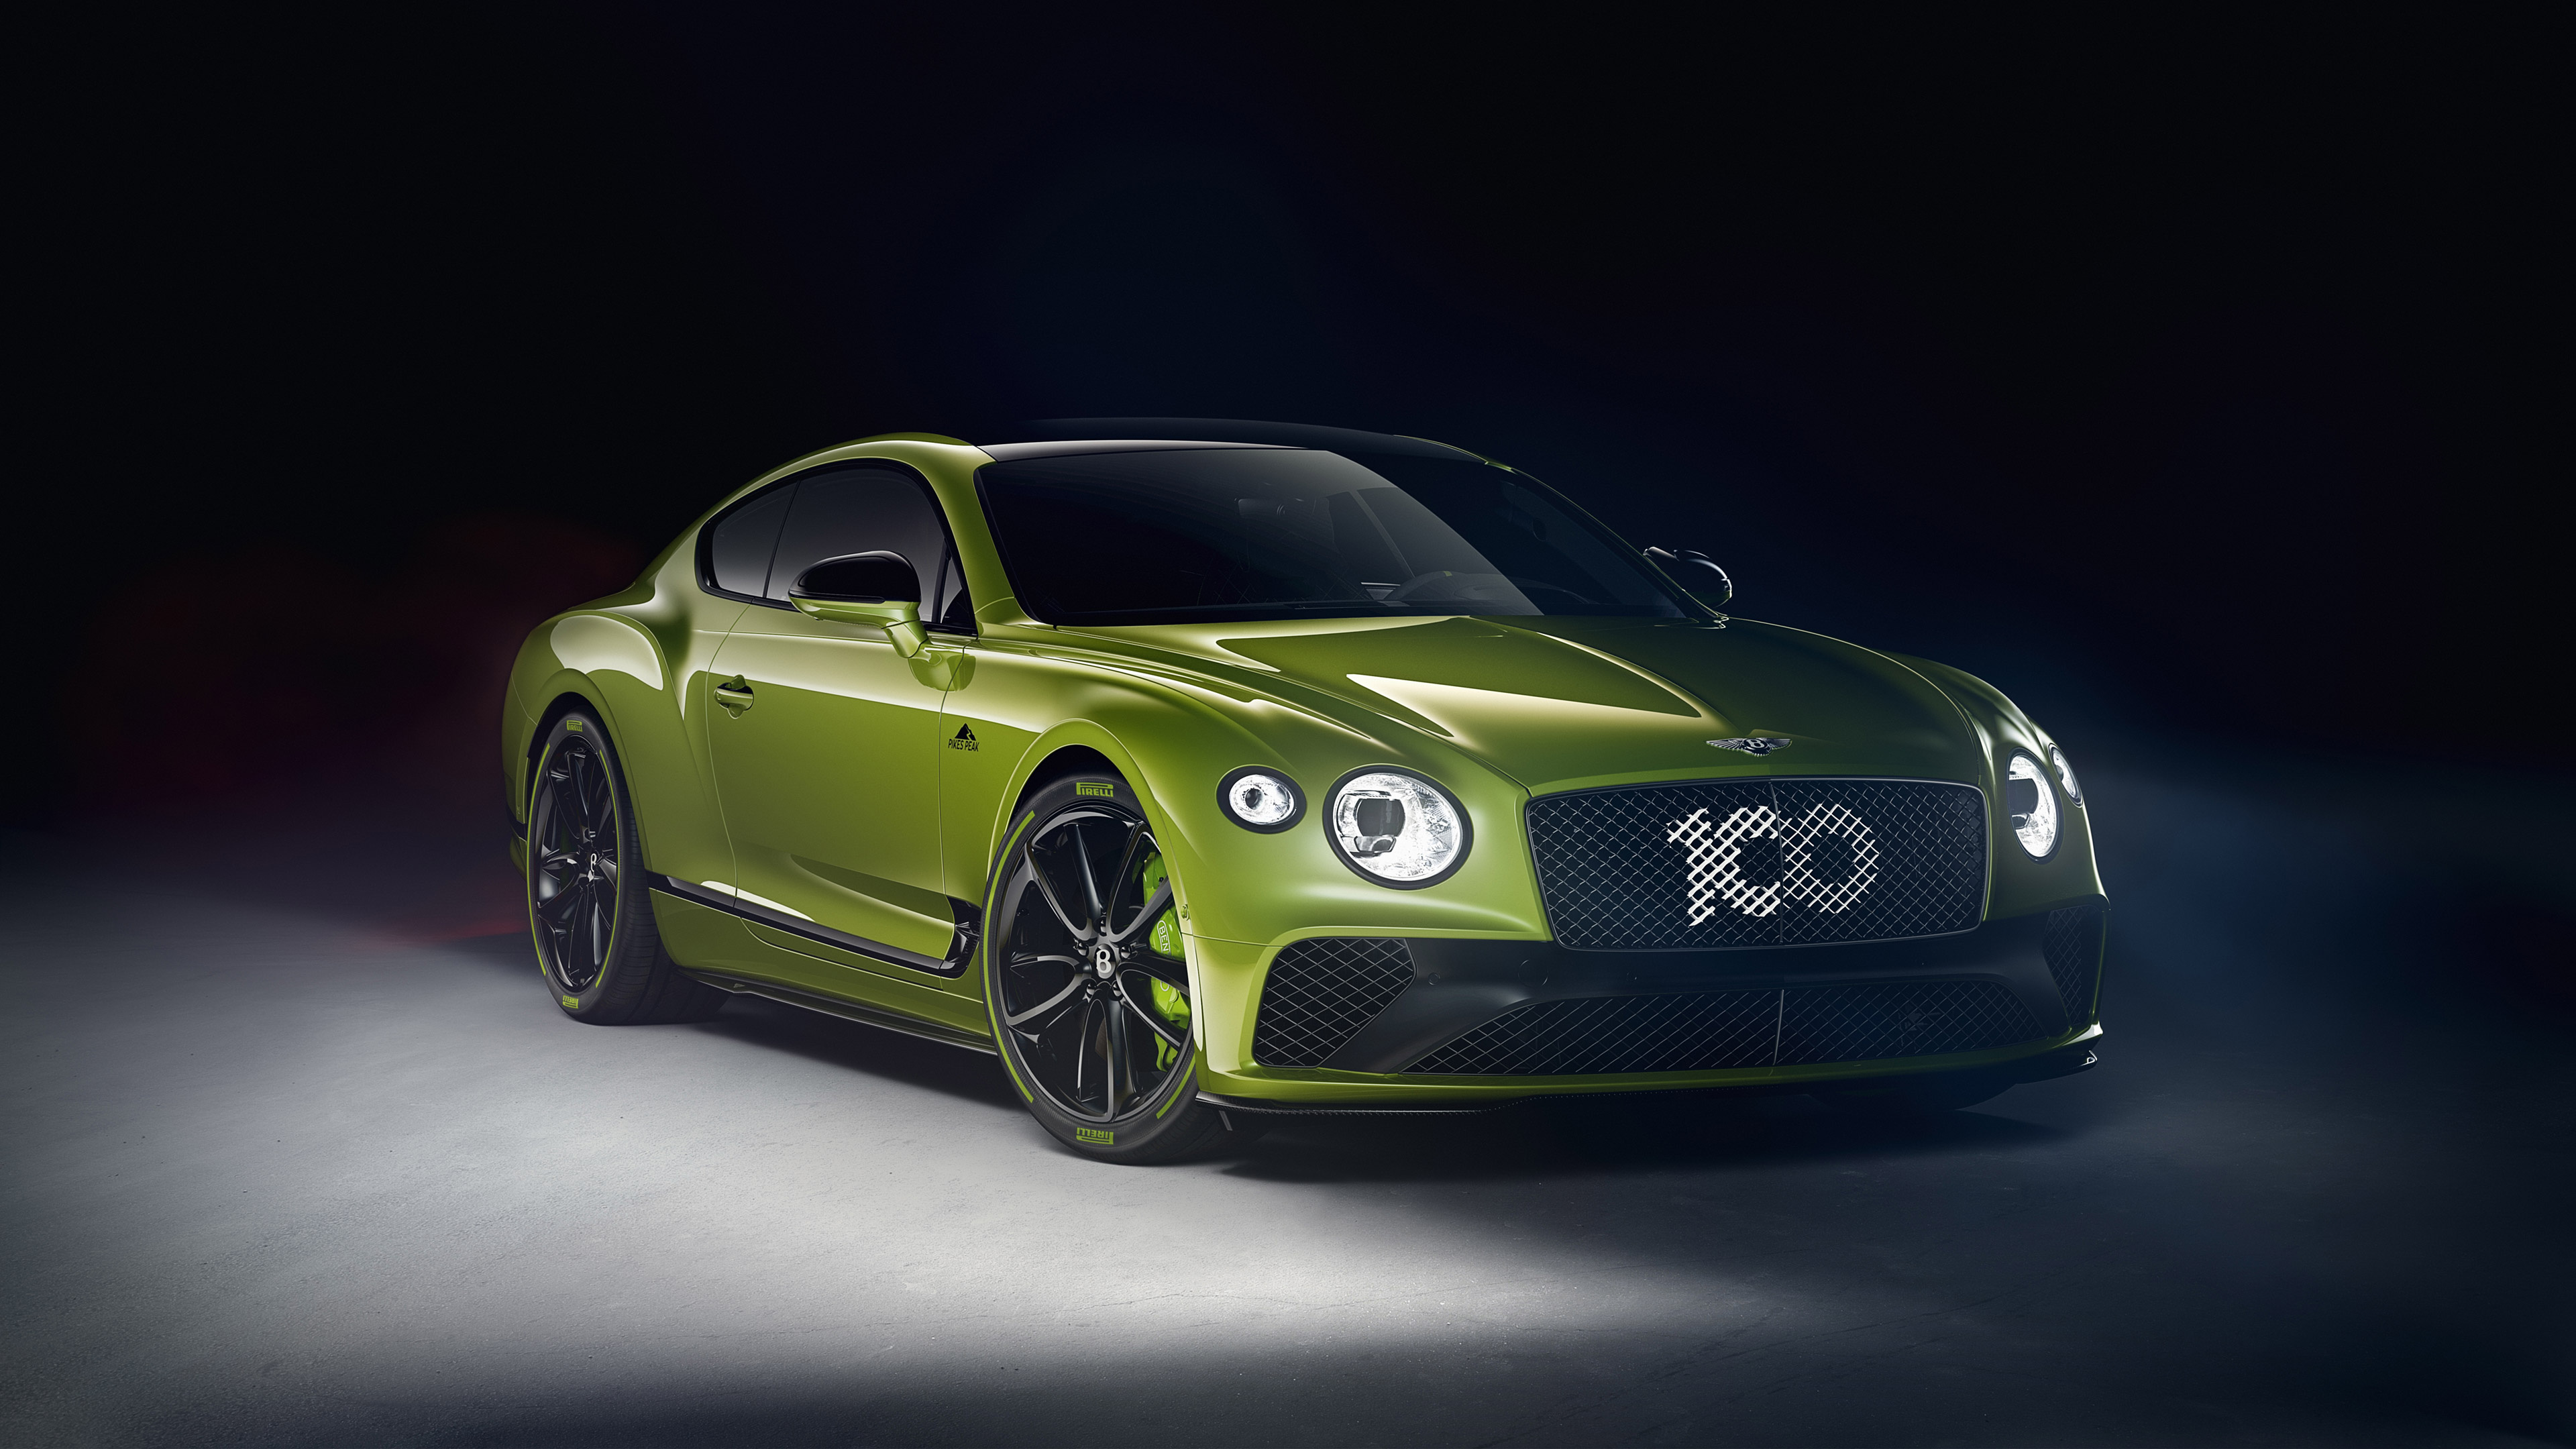 Bentley Continental GT, Car wallpapers, Spotlights ciriusbloo, HD images, 3840x2160 4K Desktop